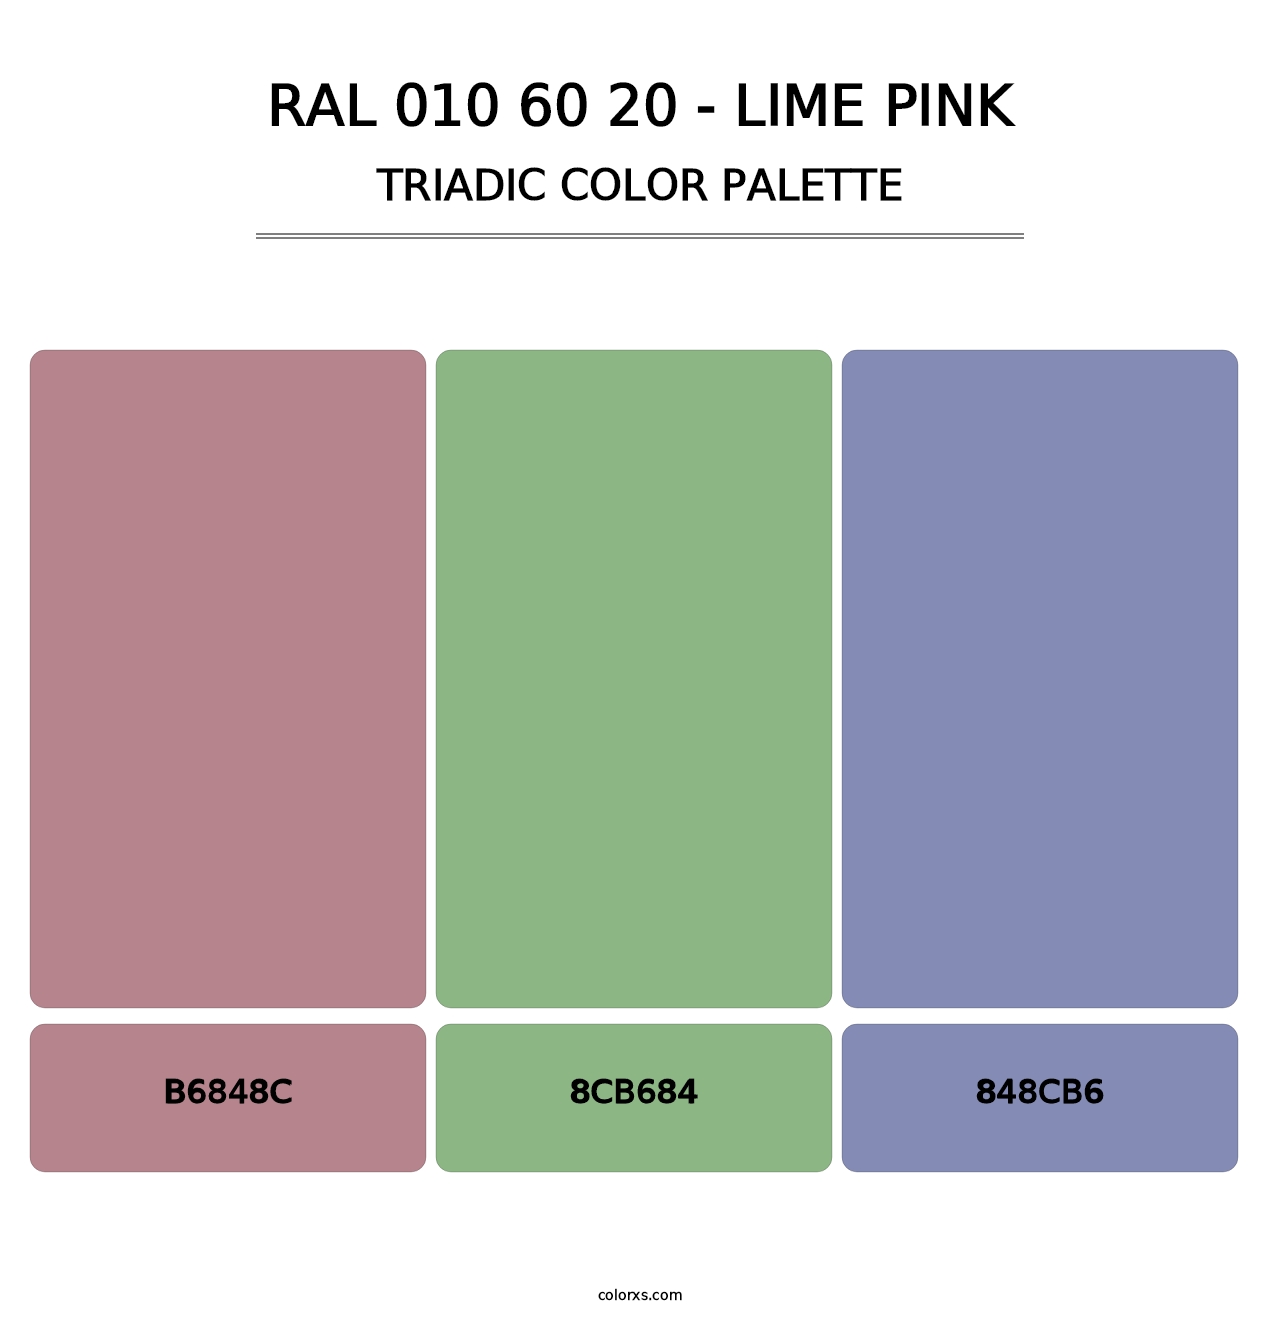 RAL 010 60 20 - Lime Pink - Triadic Color Palette